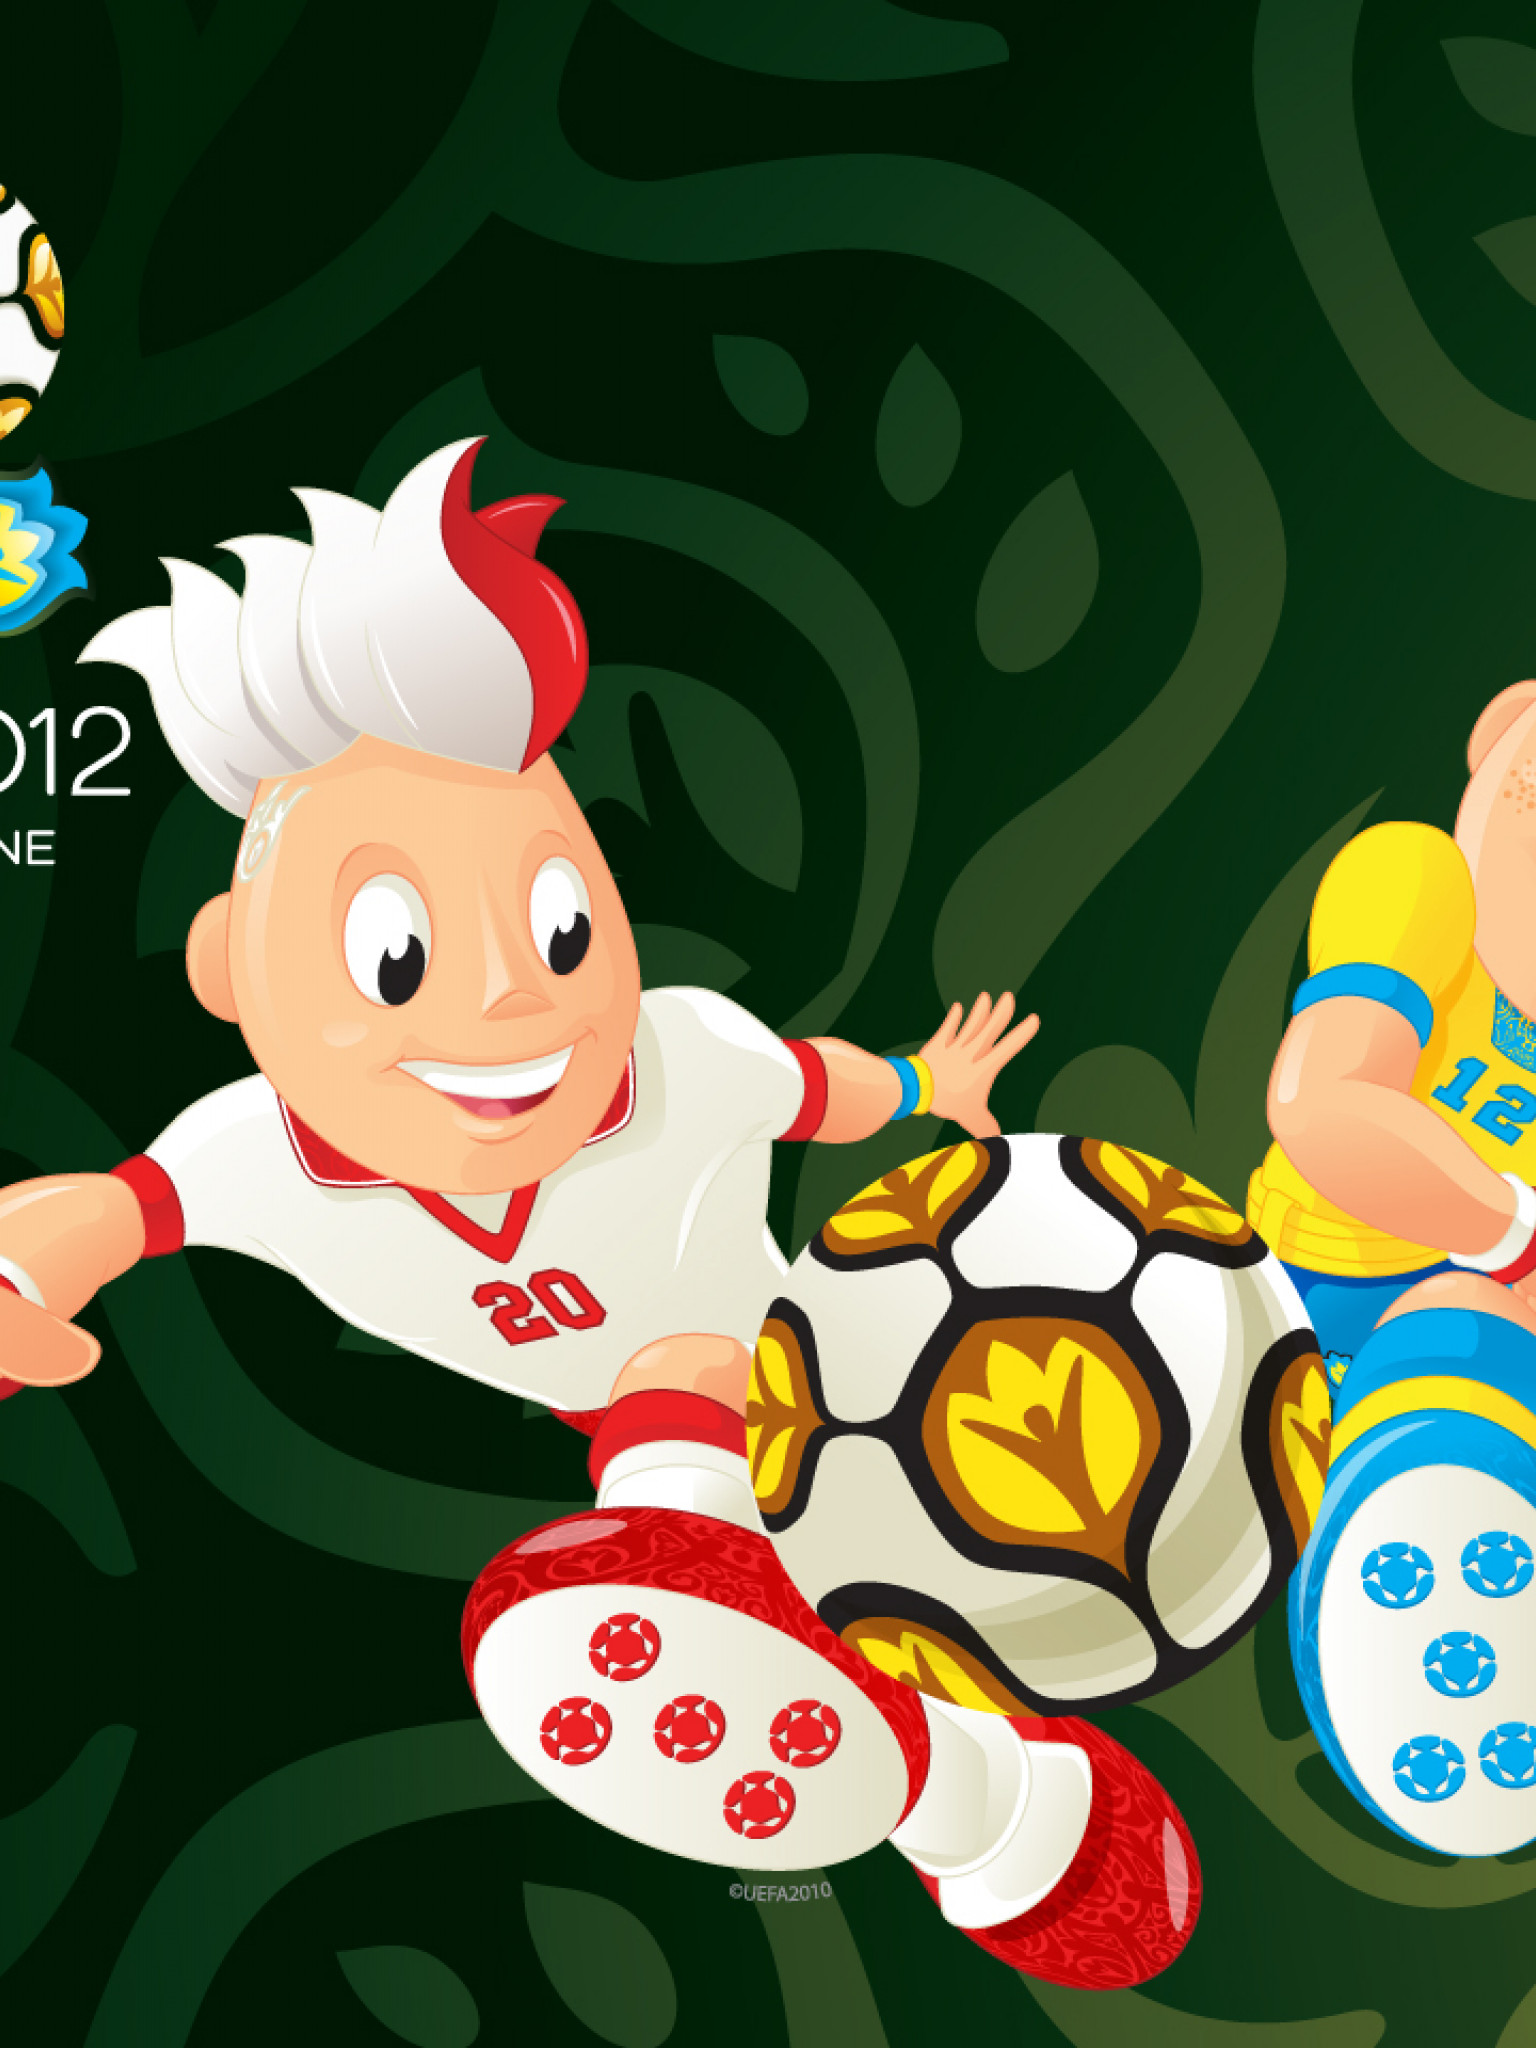 tapety-EURO-2012 (2).jpg